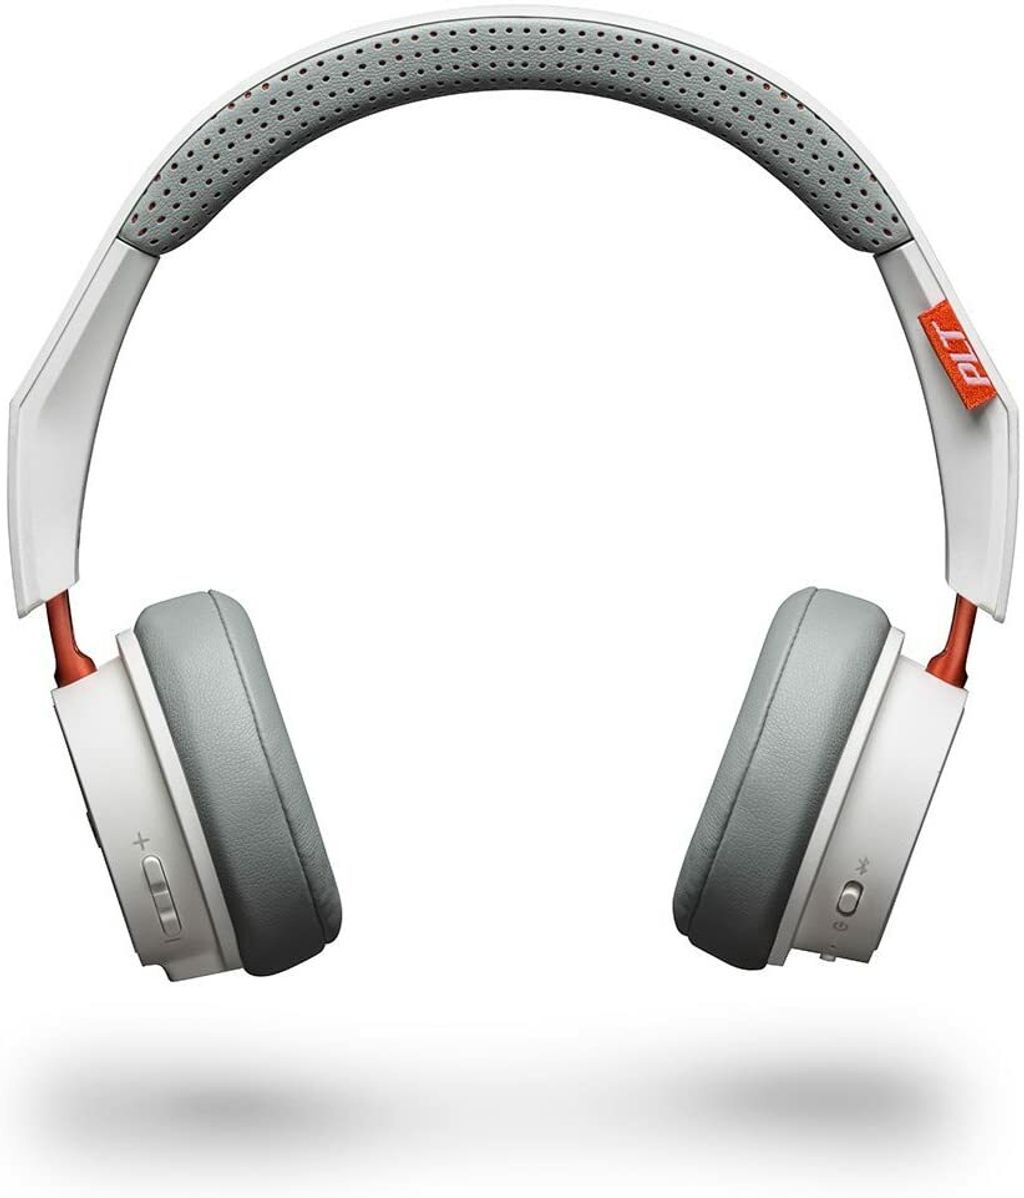 Plantronics BackBeat 500 Wireless Headphones with Mic.jpg